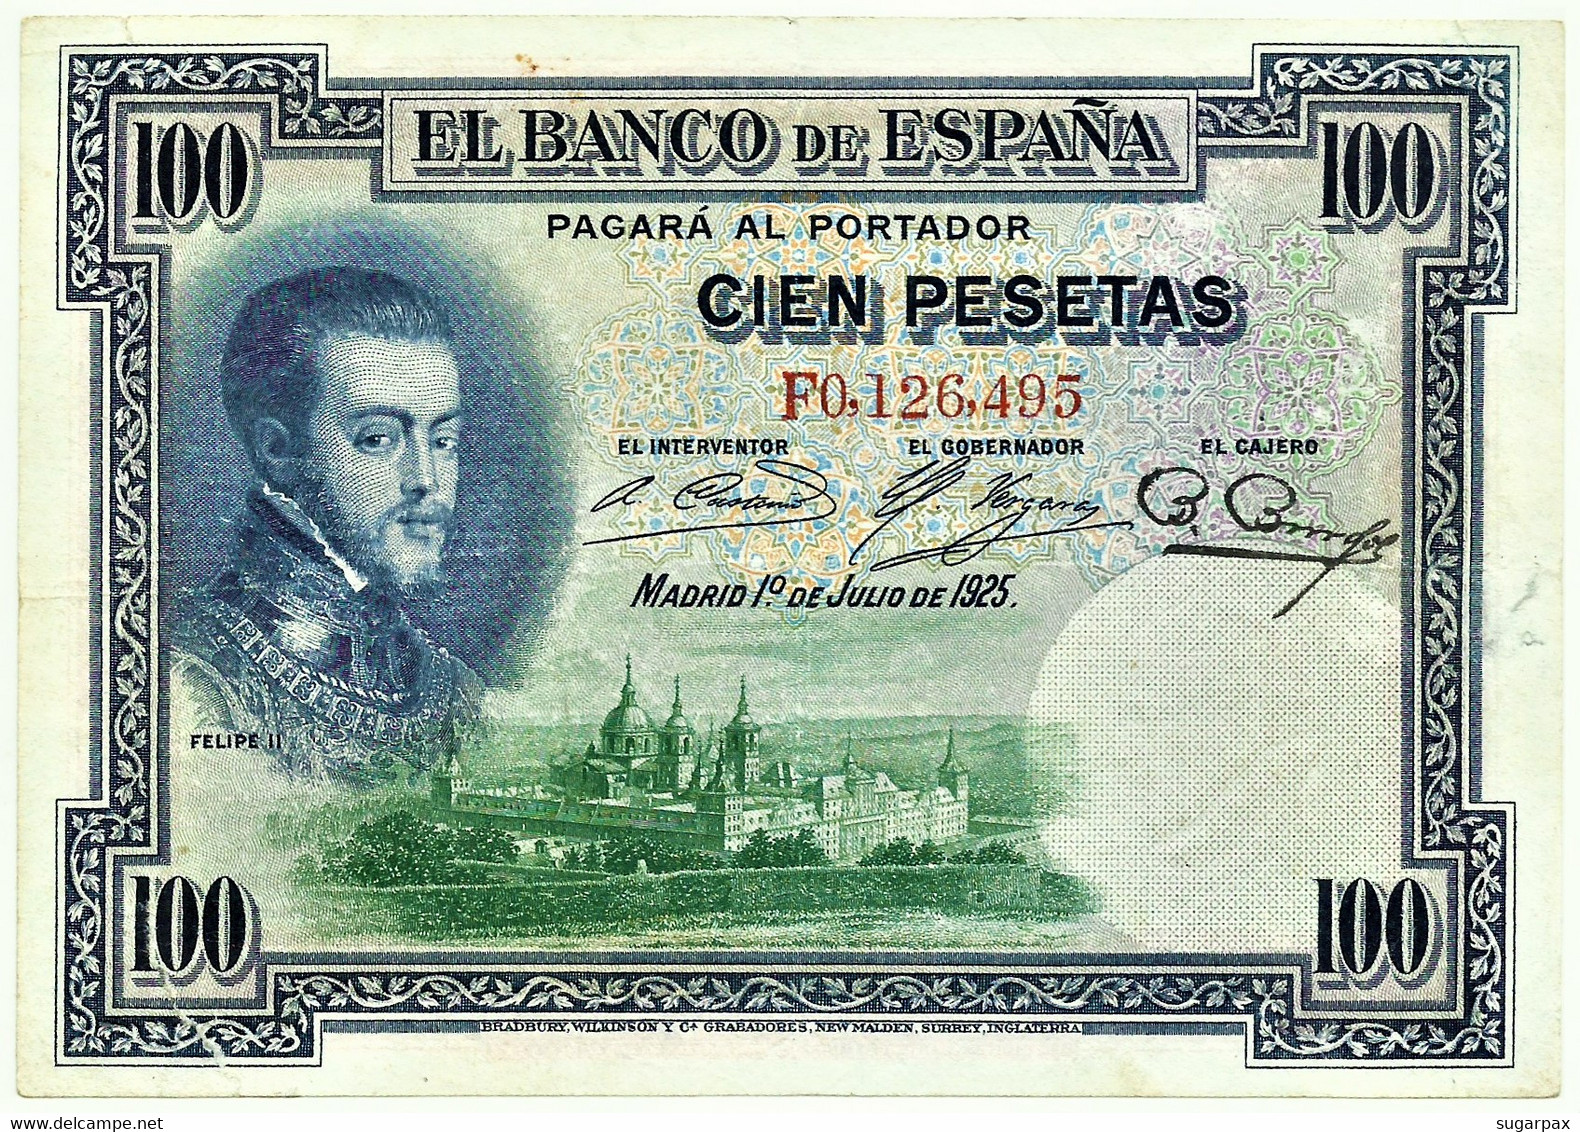 ESPAÑA - 100 Pesetas - ND 1936 ( Old Date - 01.07.1925 ) - Pick 69.c - Serie F - Filipe II - II Republica - 100 Pesetas